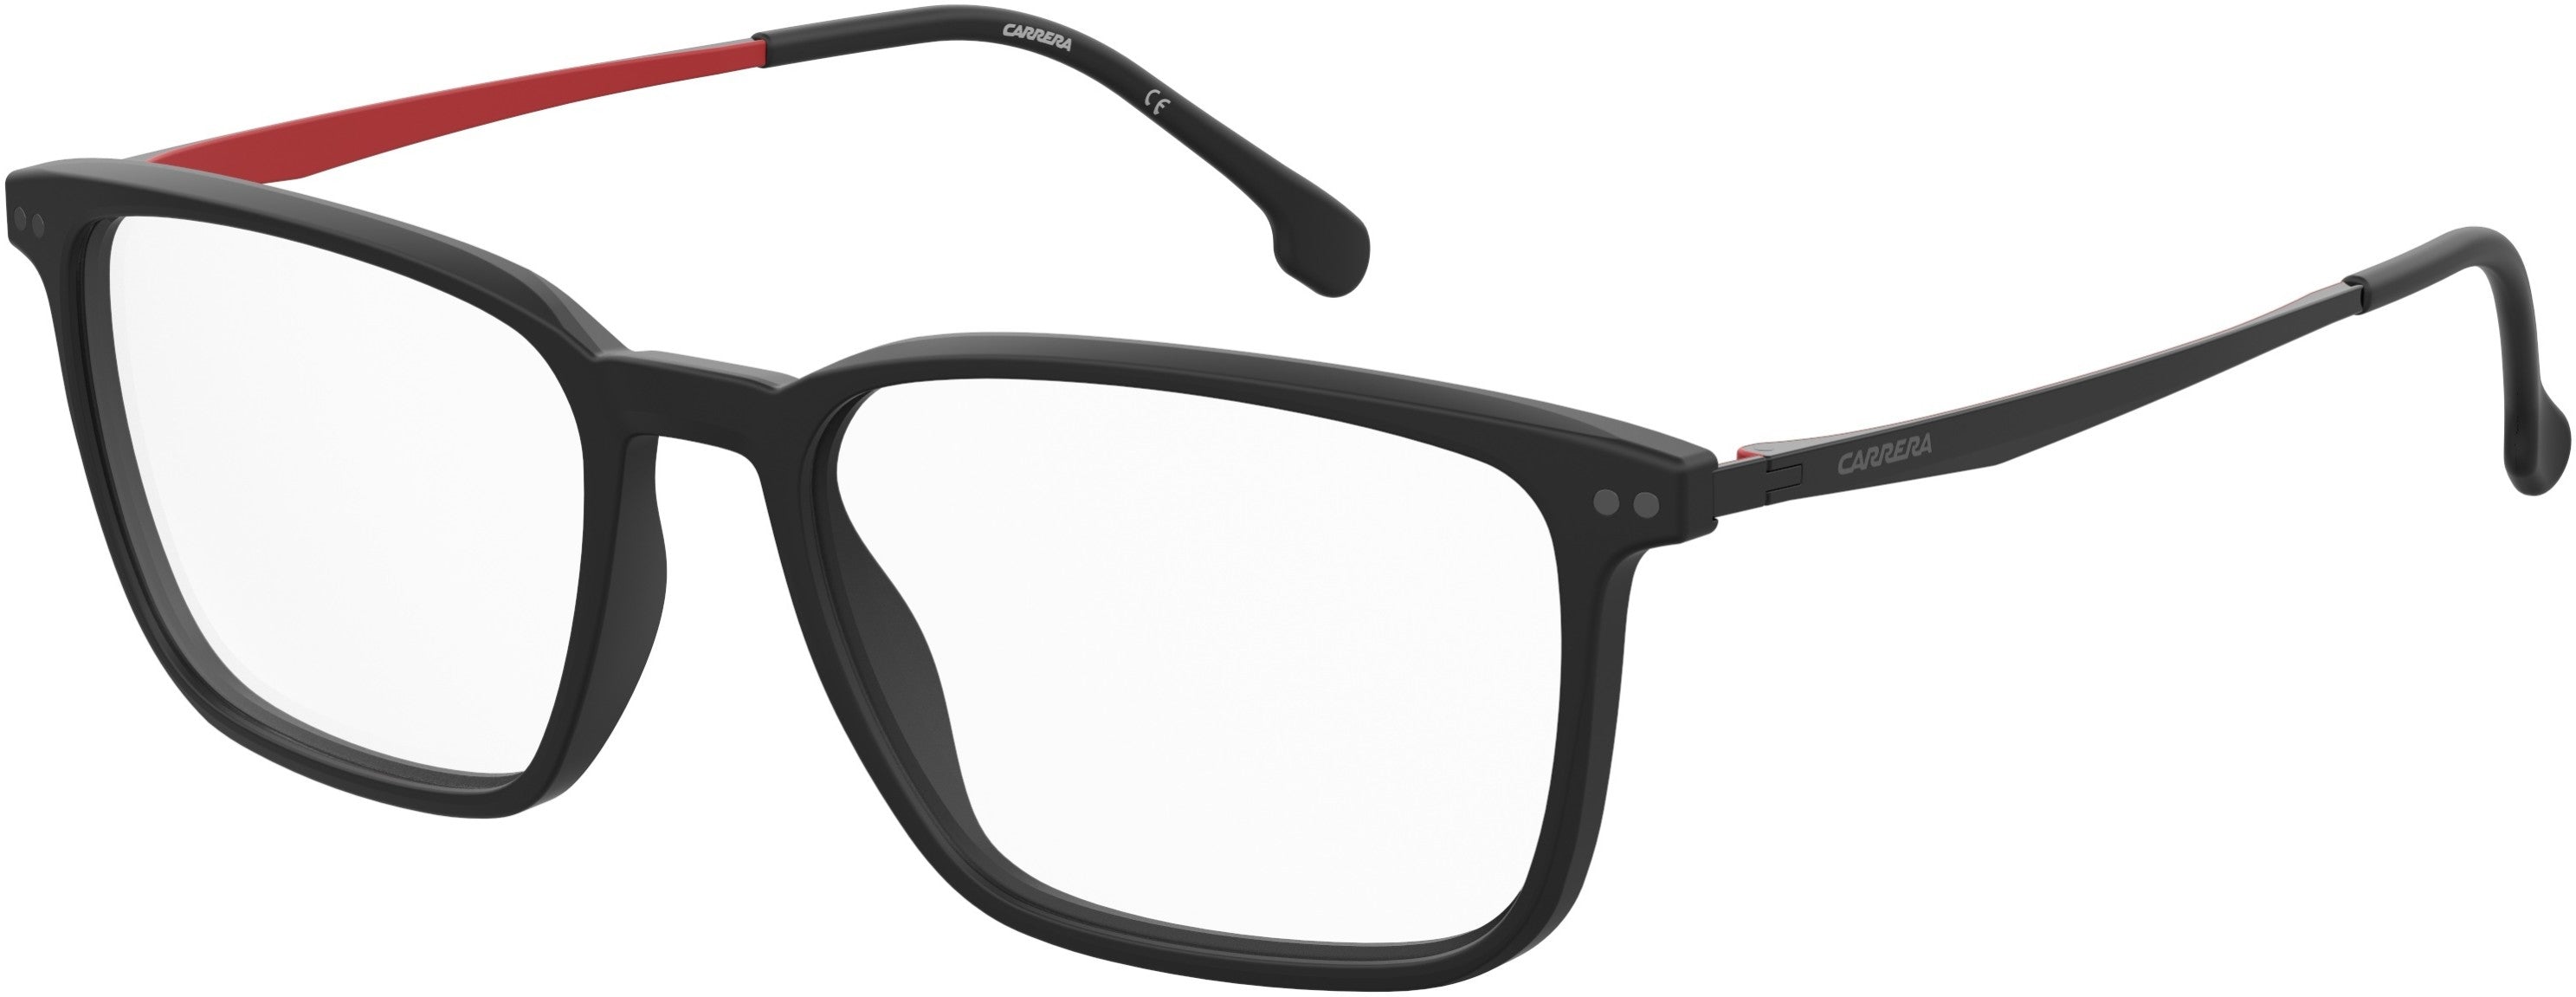  Carrera 8859 Rectangular Eyeglasses 0003-0003  Matte Black (00 Demo Lens)